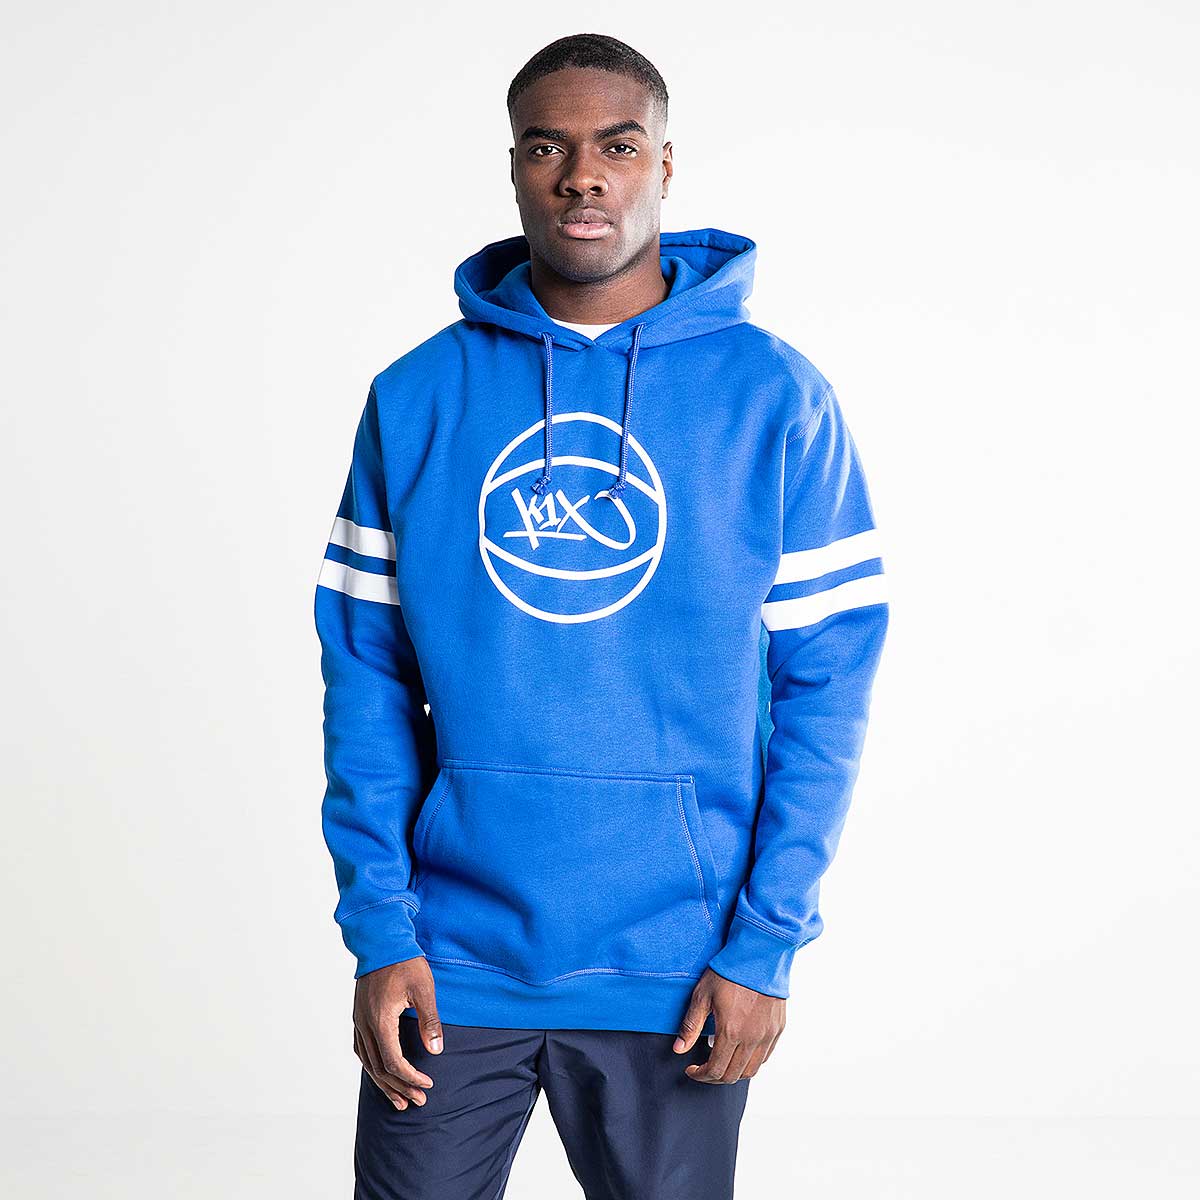 K1X basketball hoodie - Blue